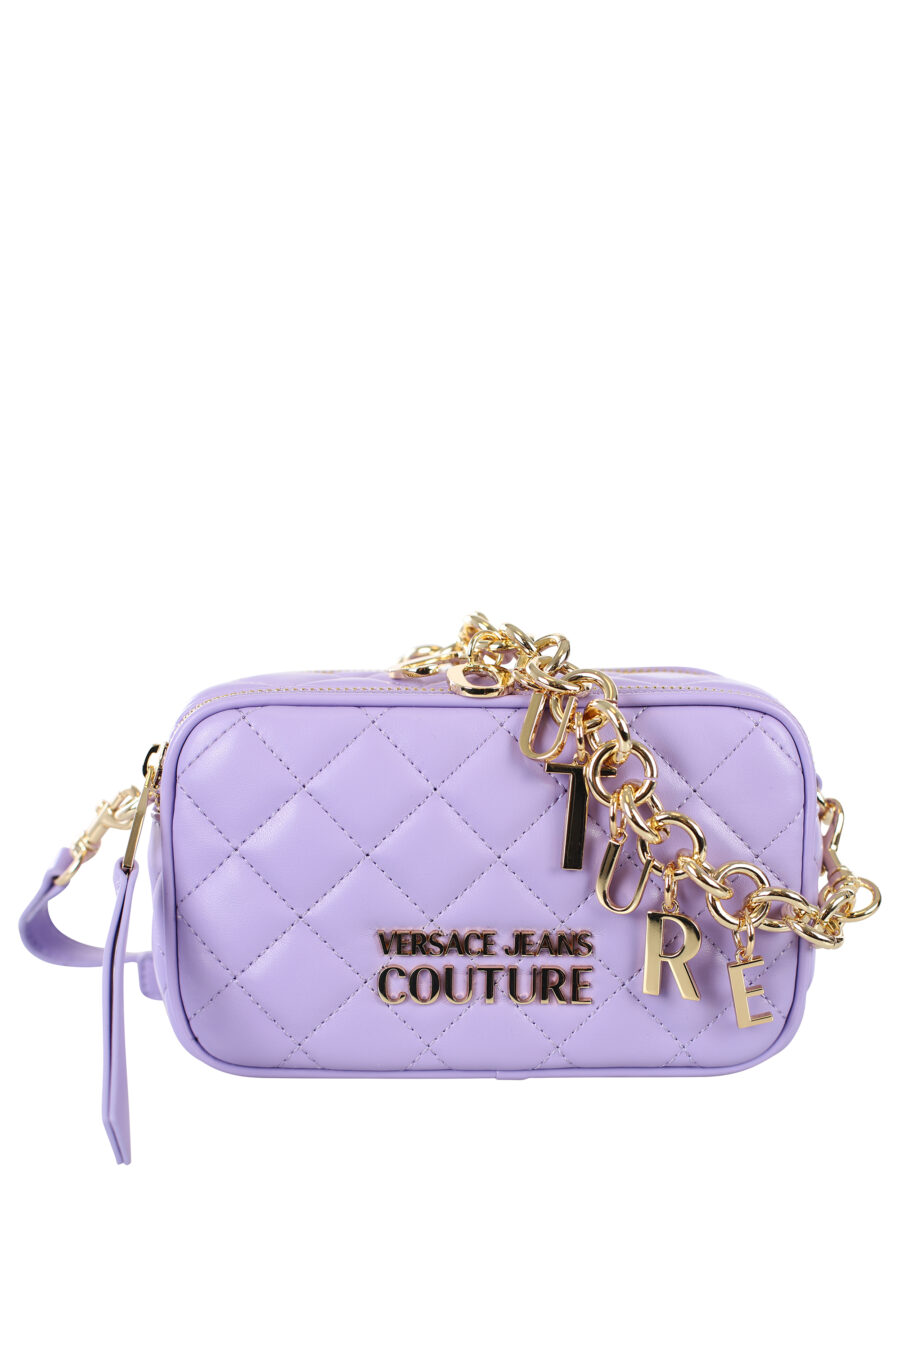 Bolso mini violeta acolchado con charms en cadena - IMG 7226